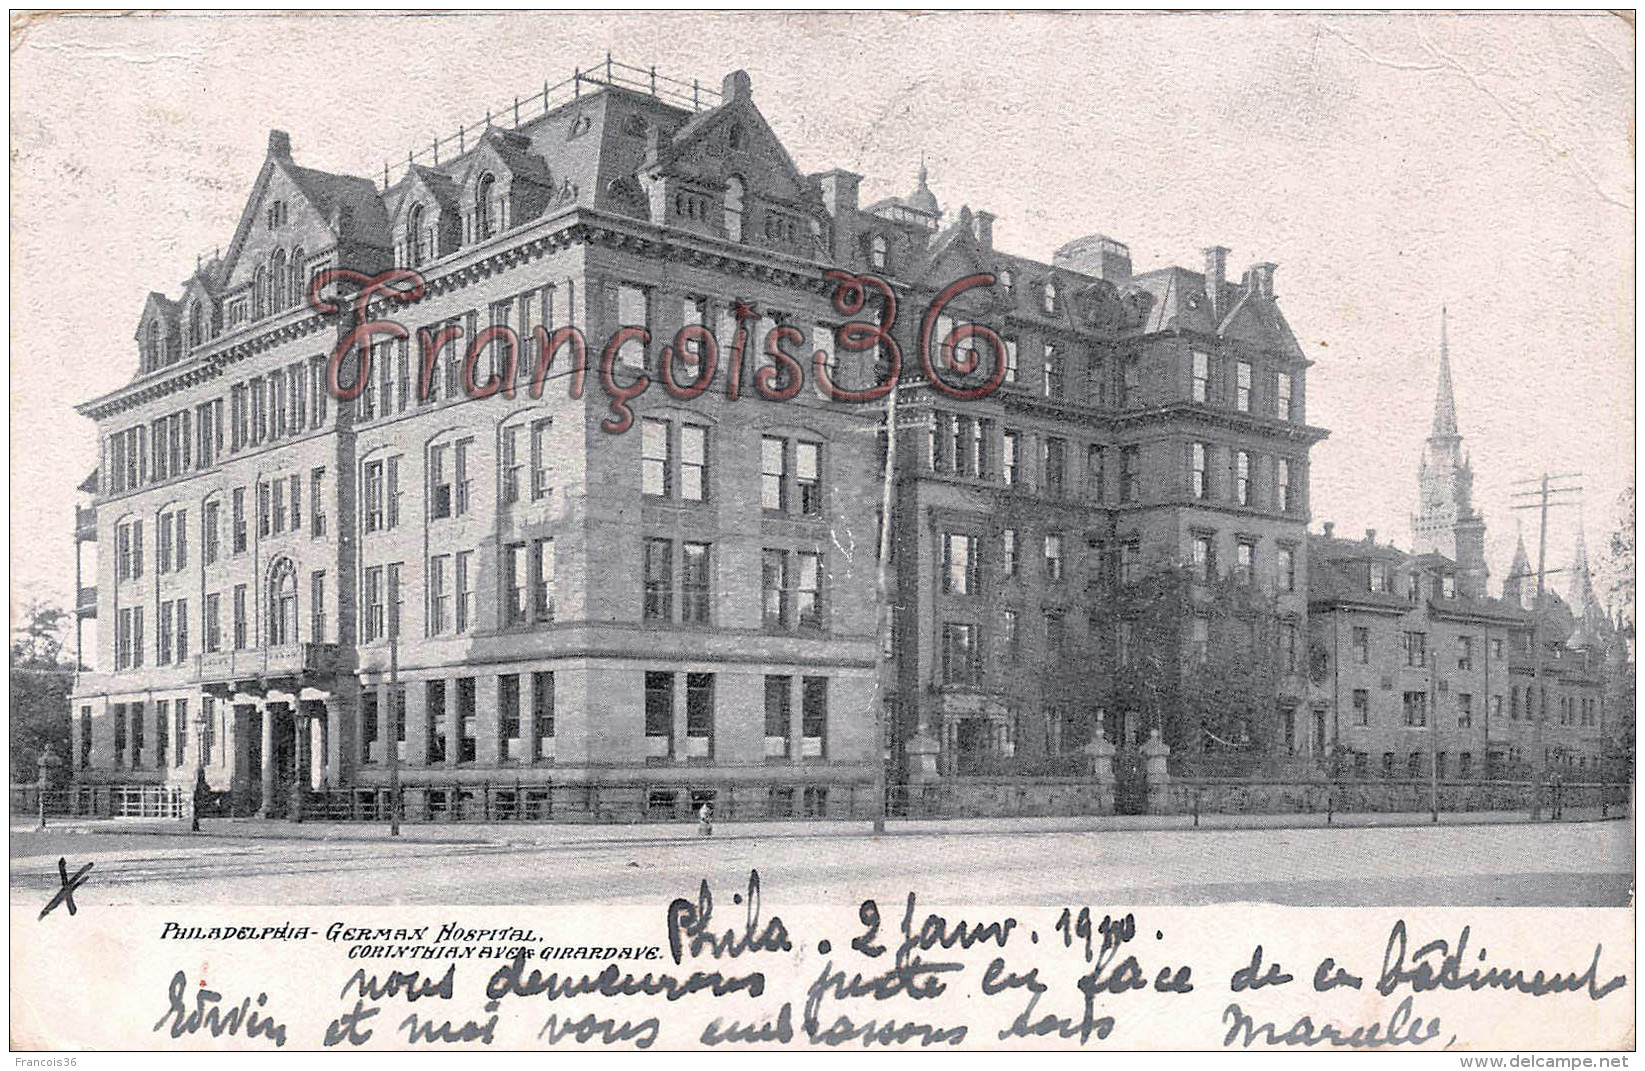 Pennsylvania - German Hospital Corinthianave Girardave 1910 - Philadelphia - 2 SCANS - Philadelphia